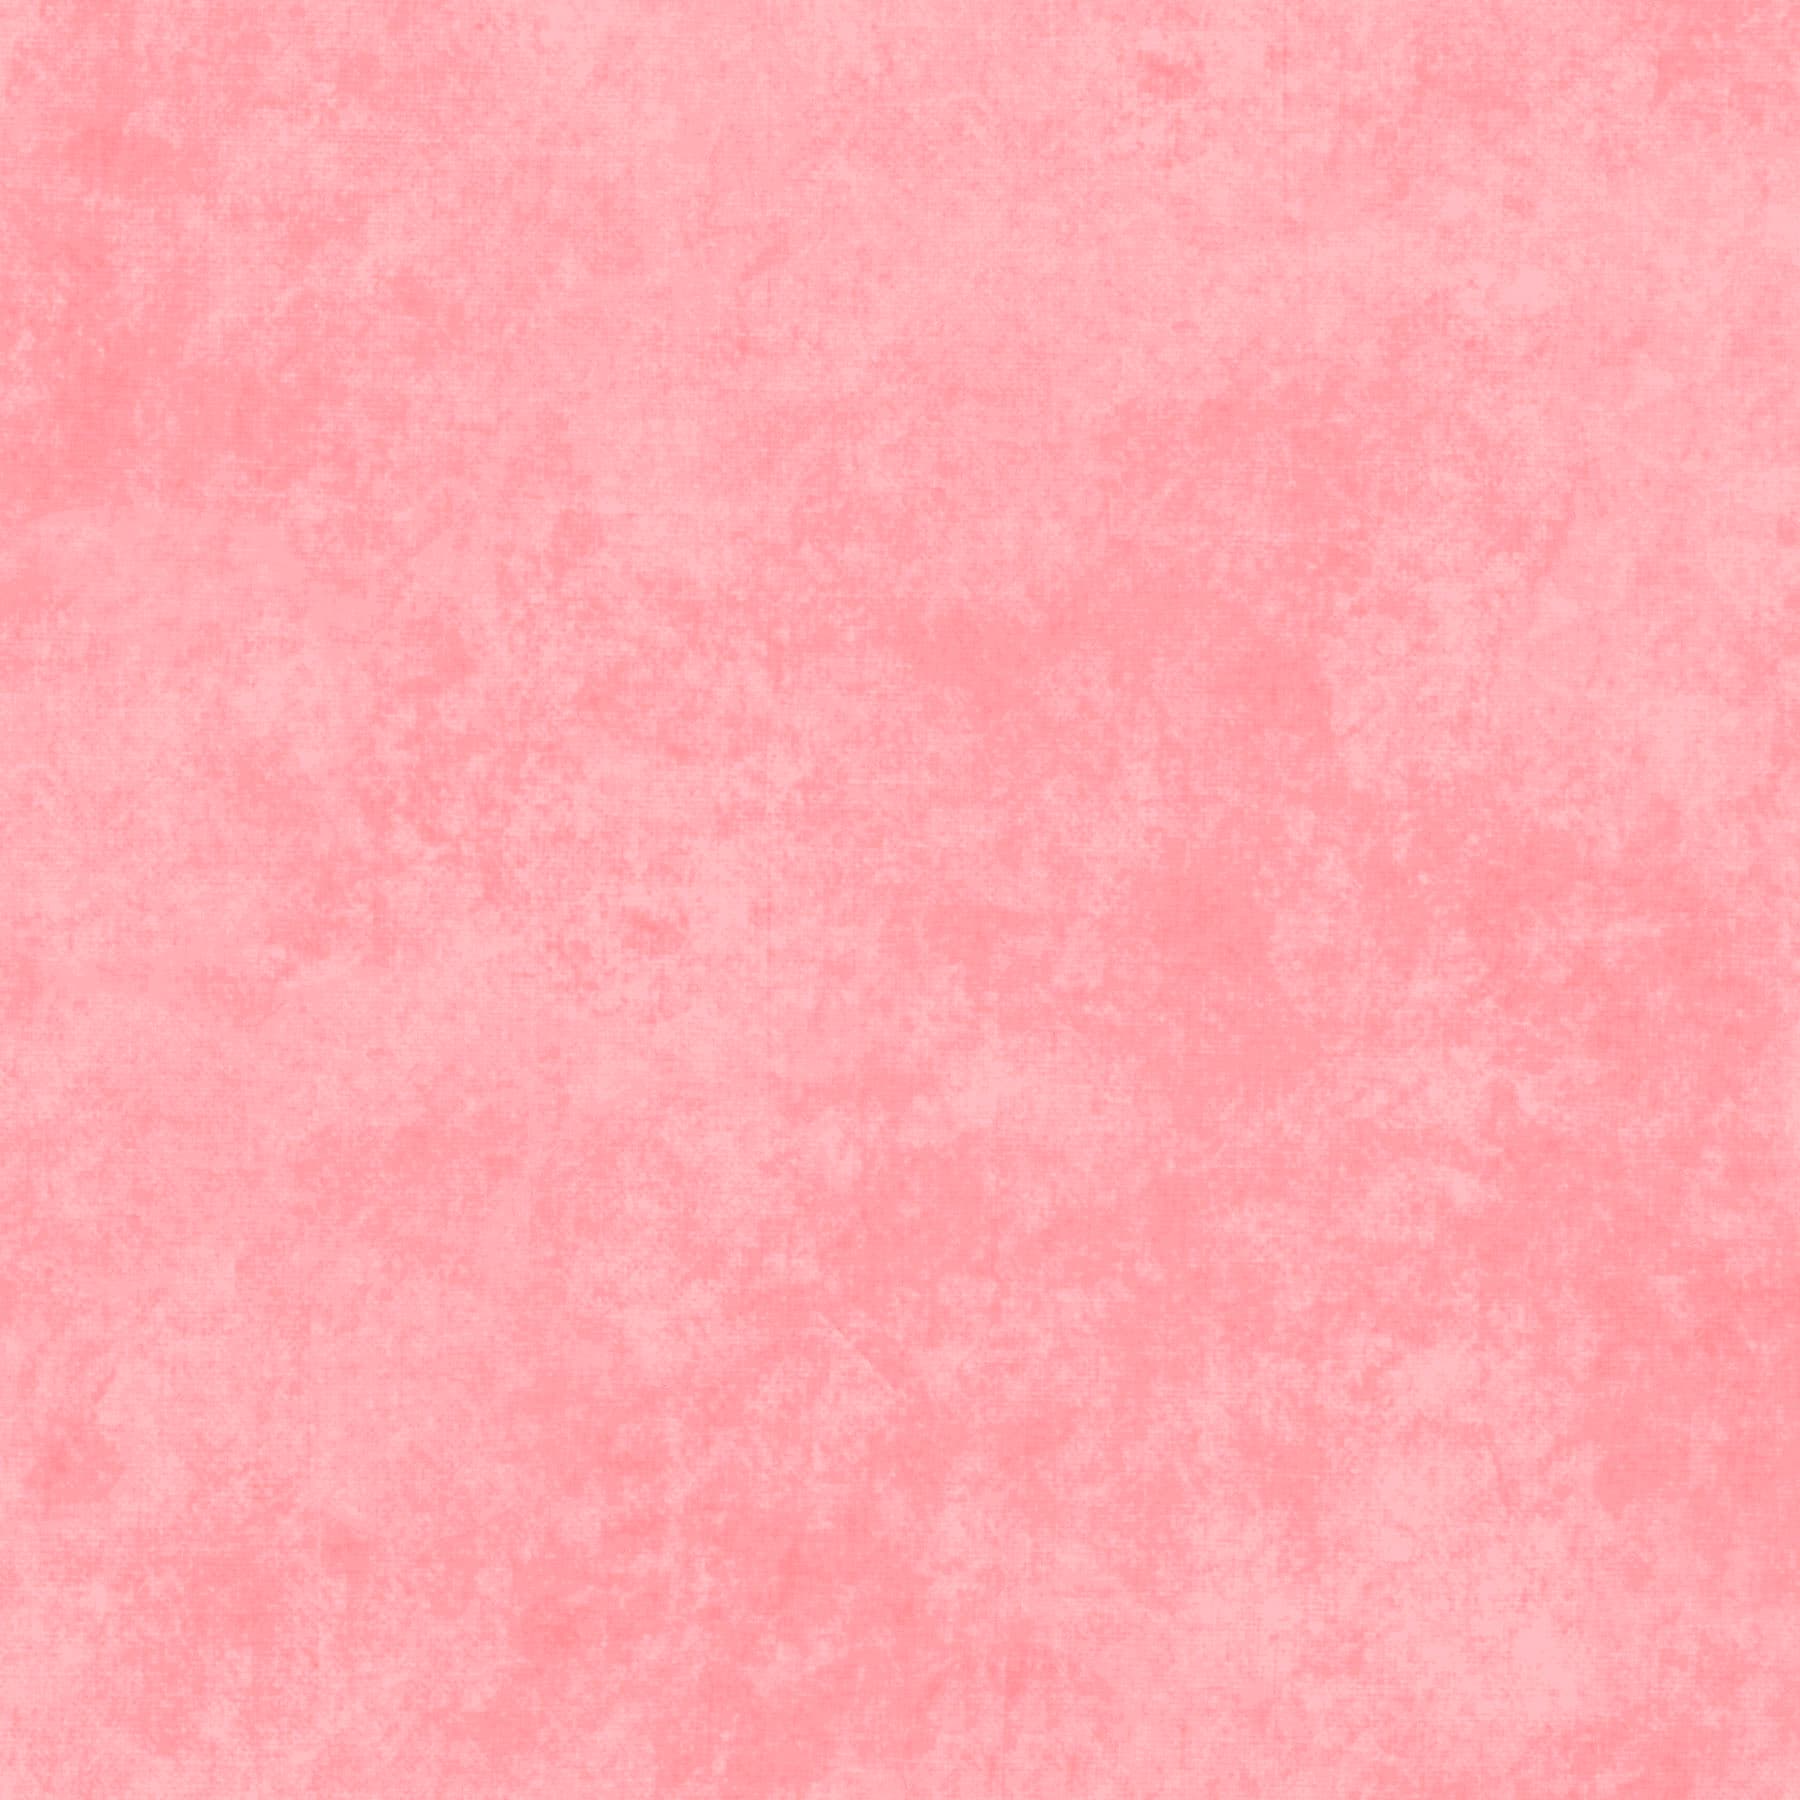 Shadow Play - Geranium Pink / Strawberry Ice (513-P8) Tonal Blender by Maywood Studio